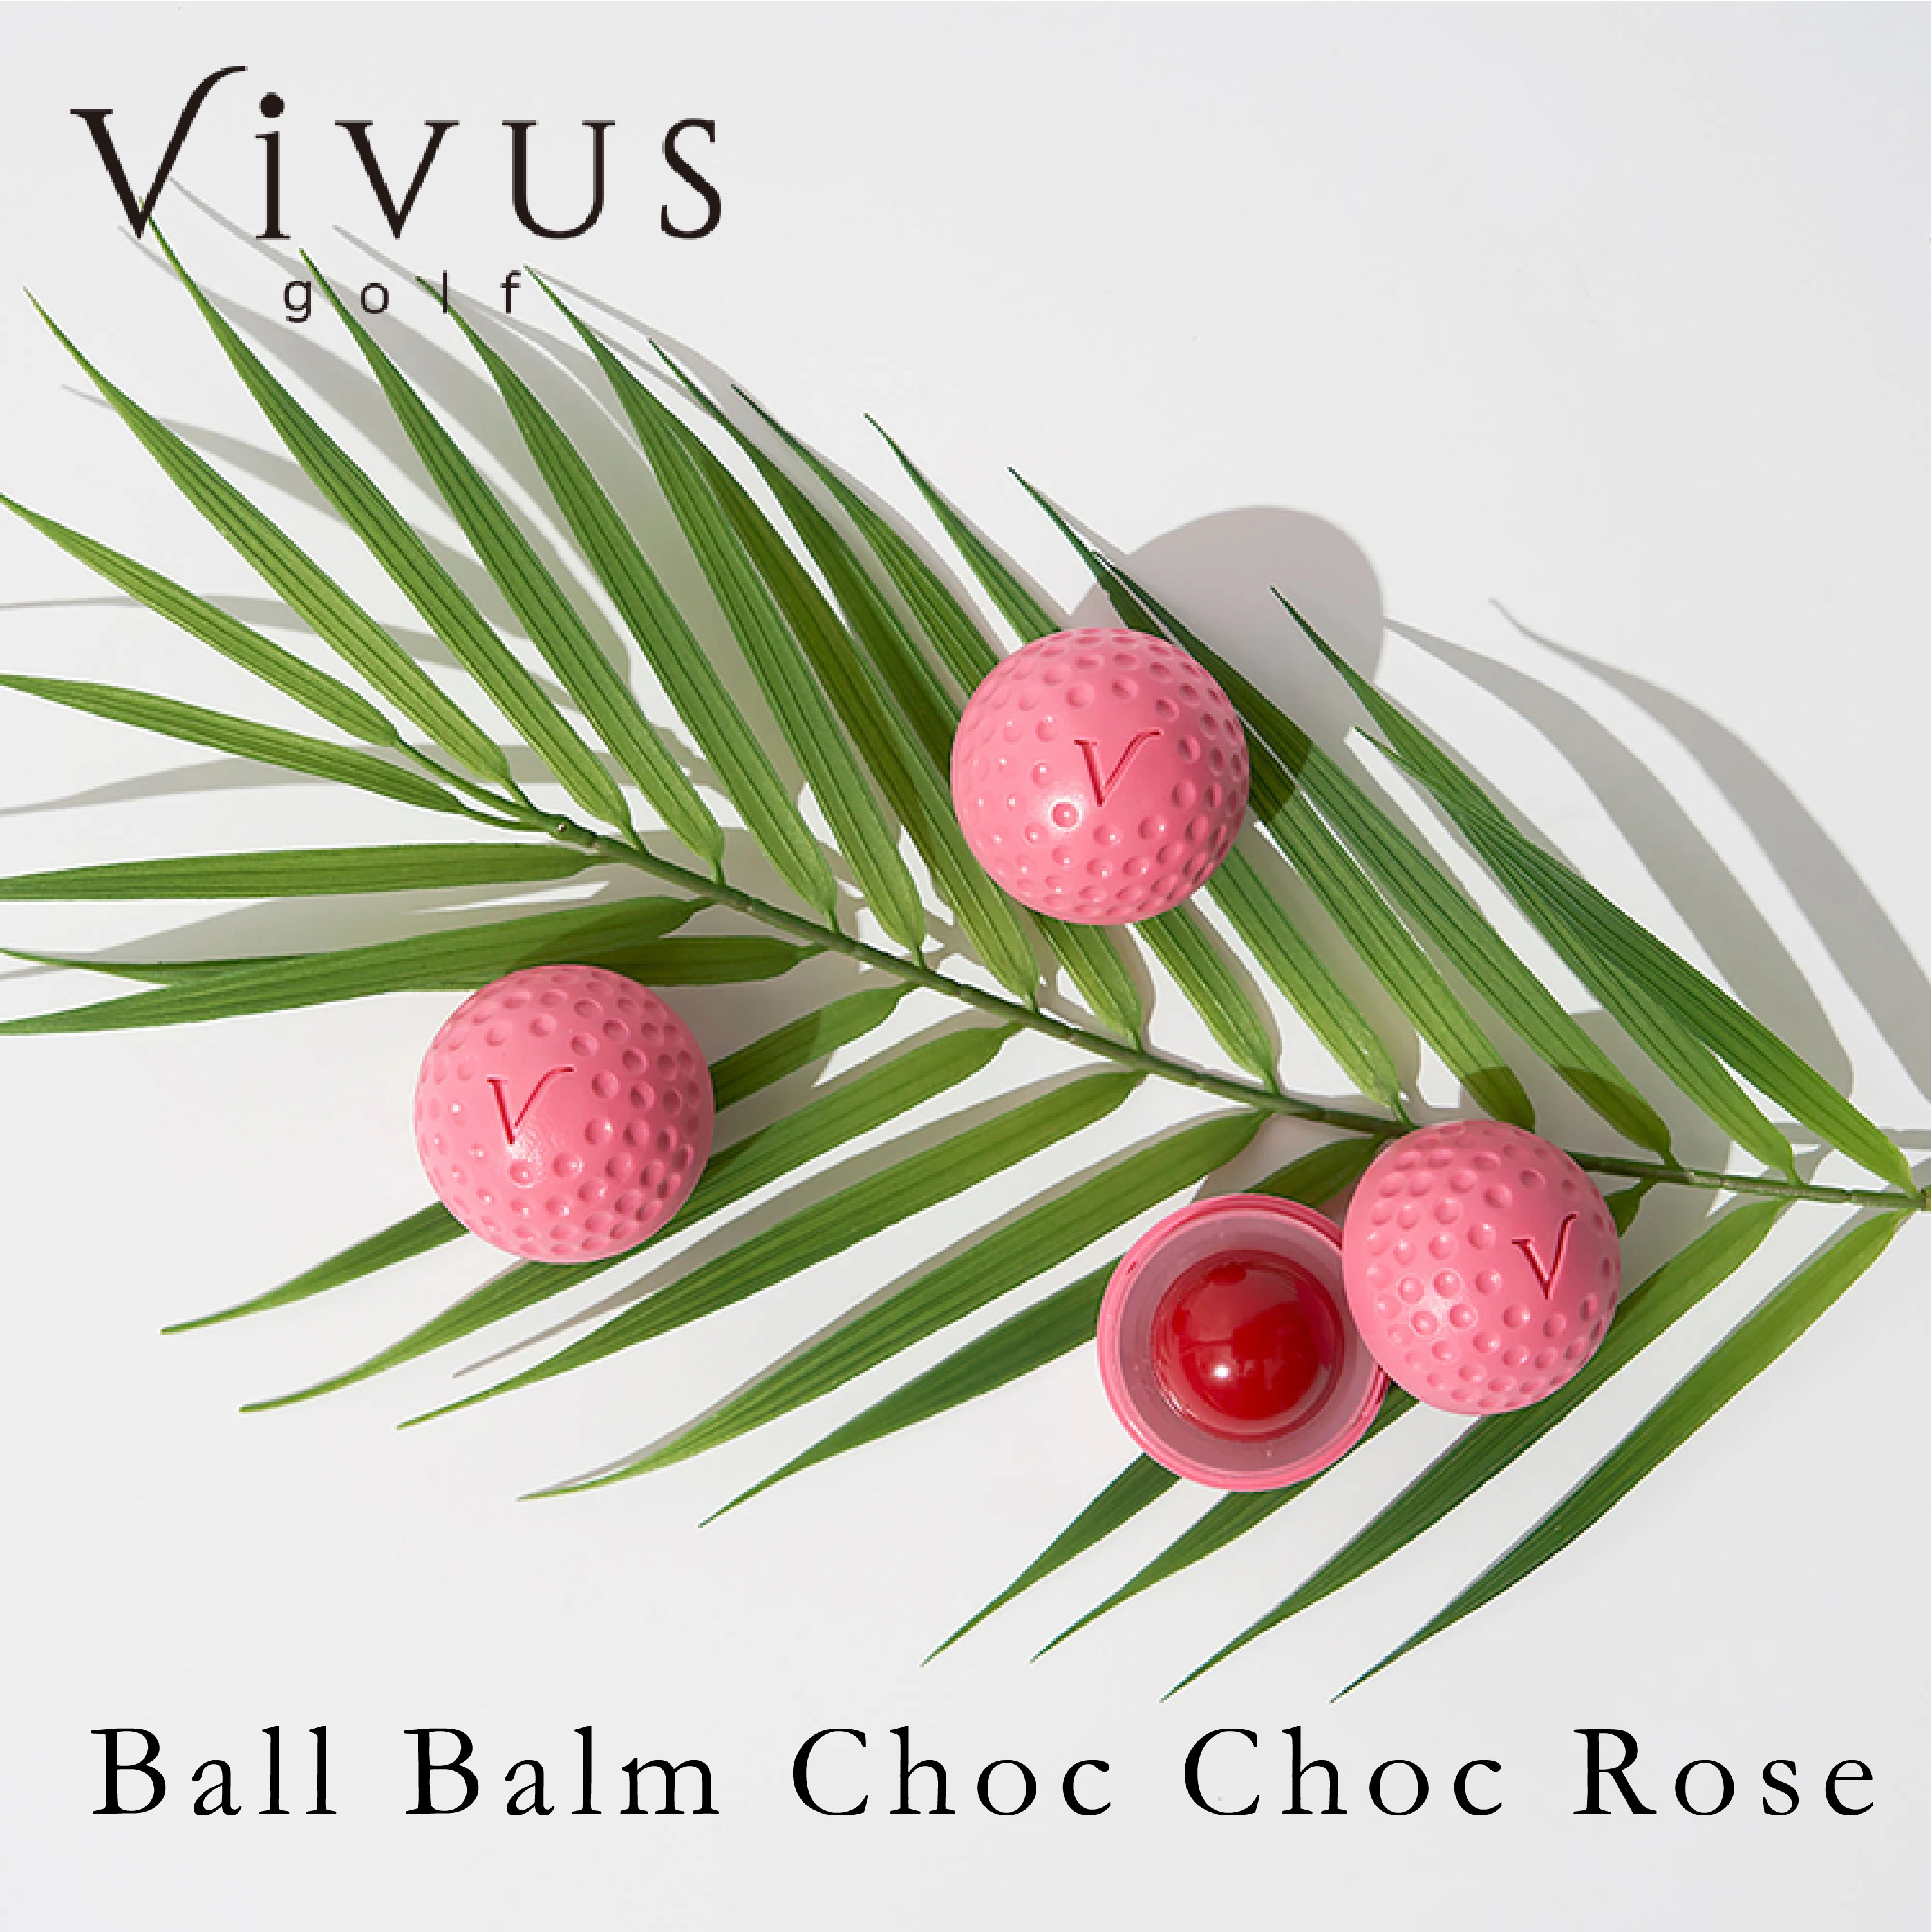 VIVUS golf Ball Balm Choc Choc Rose VI5MNJ02-060